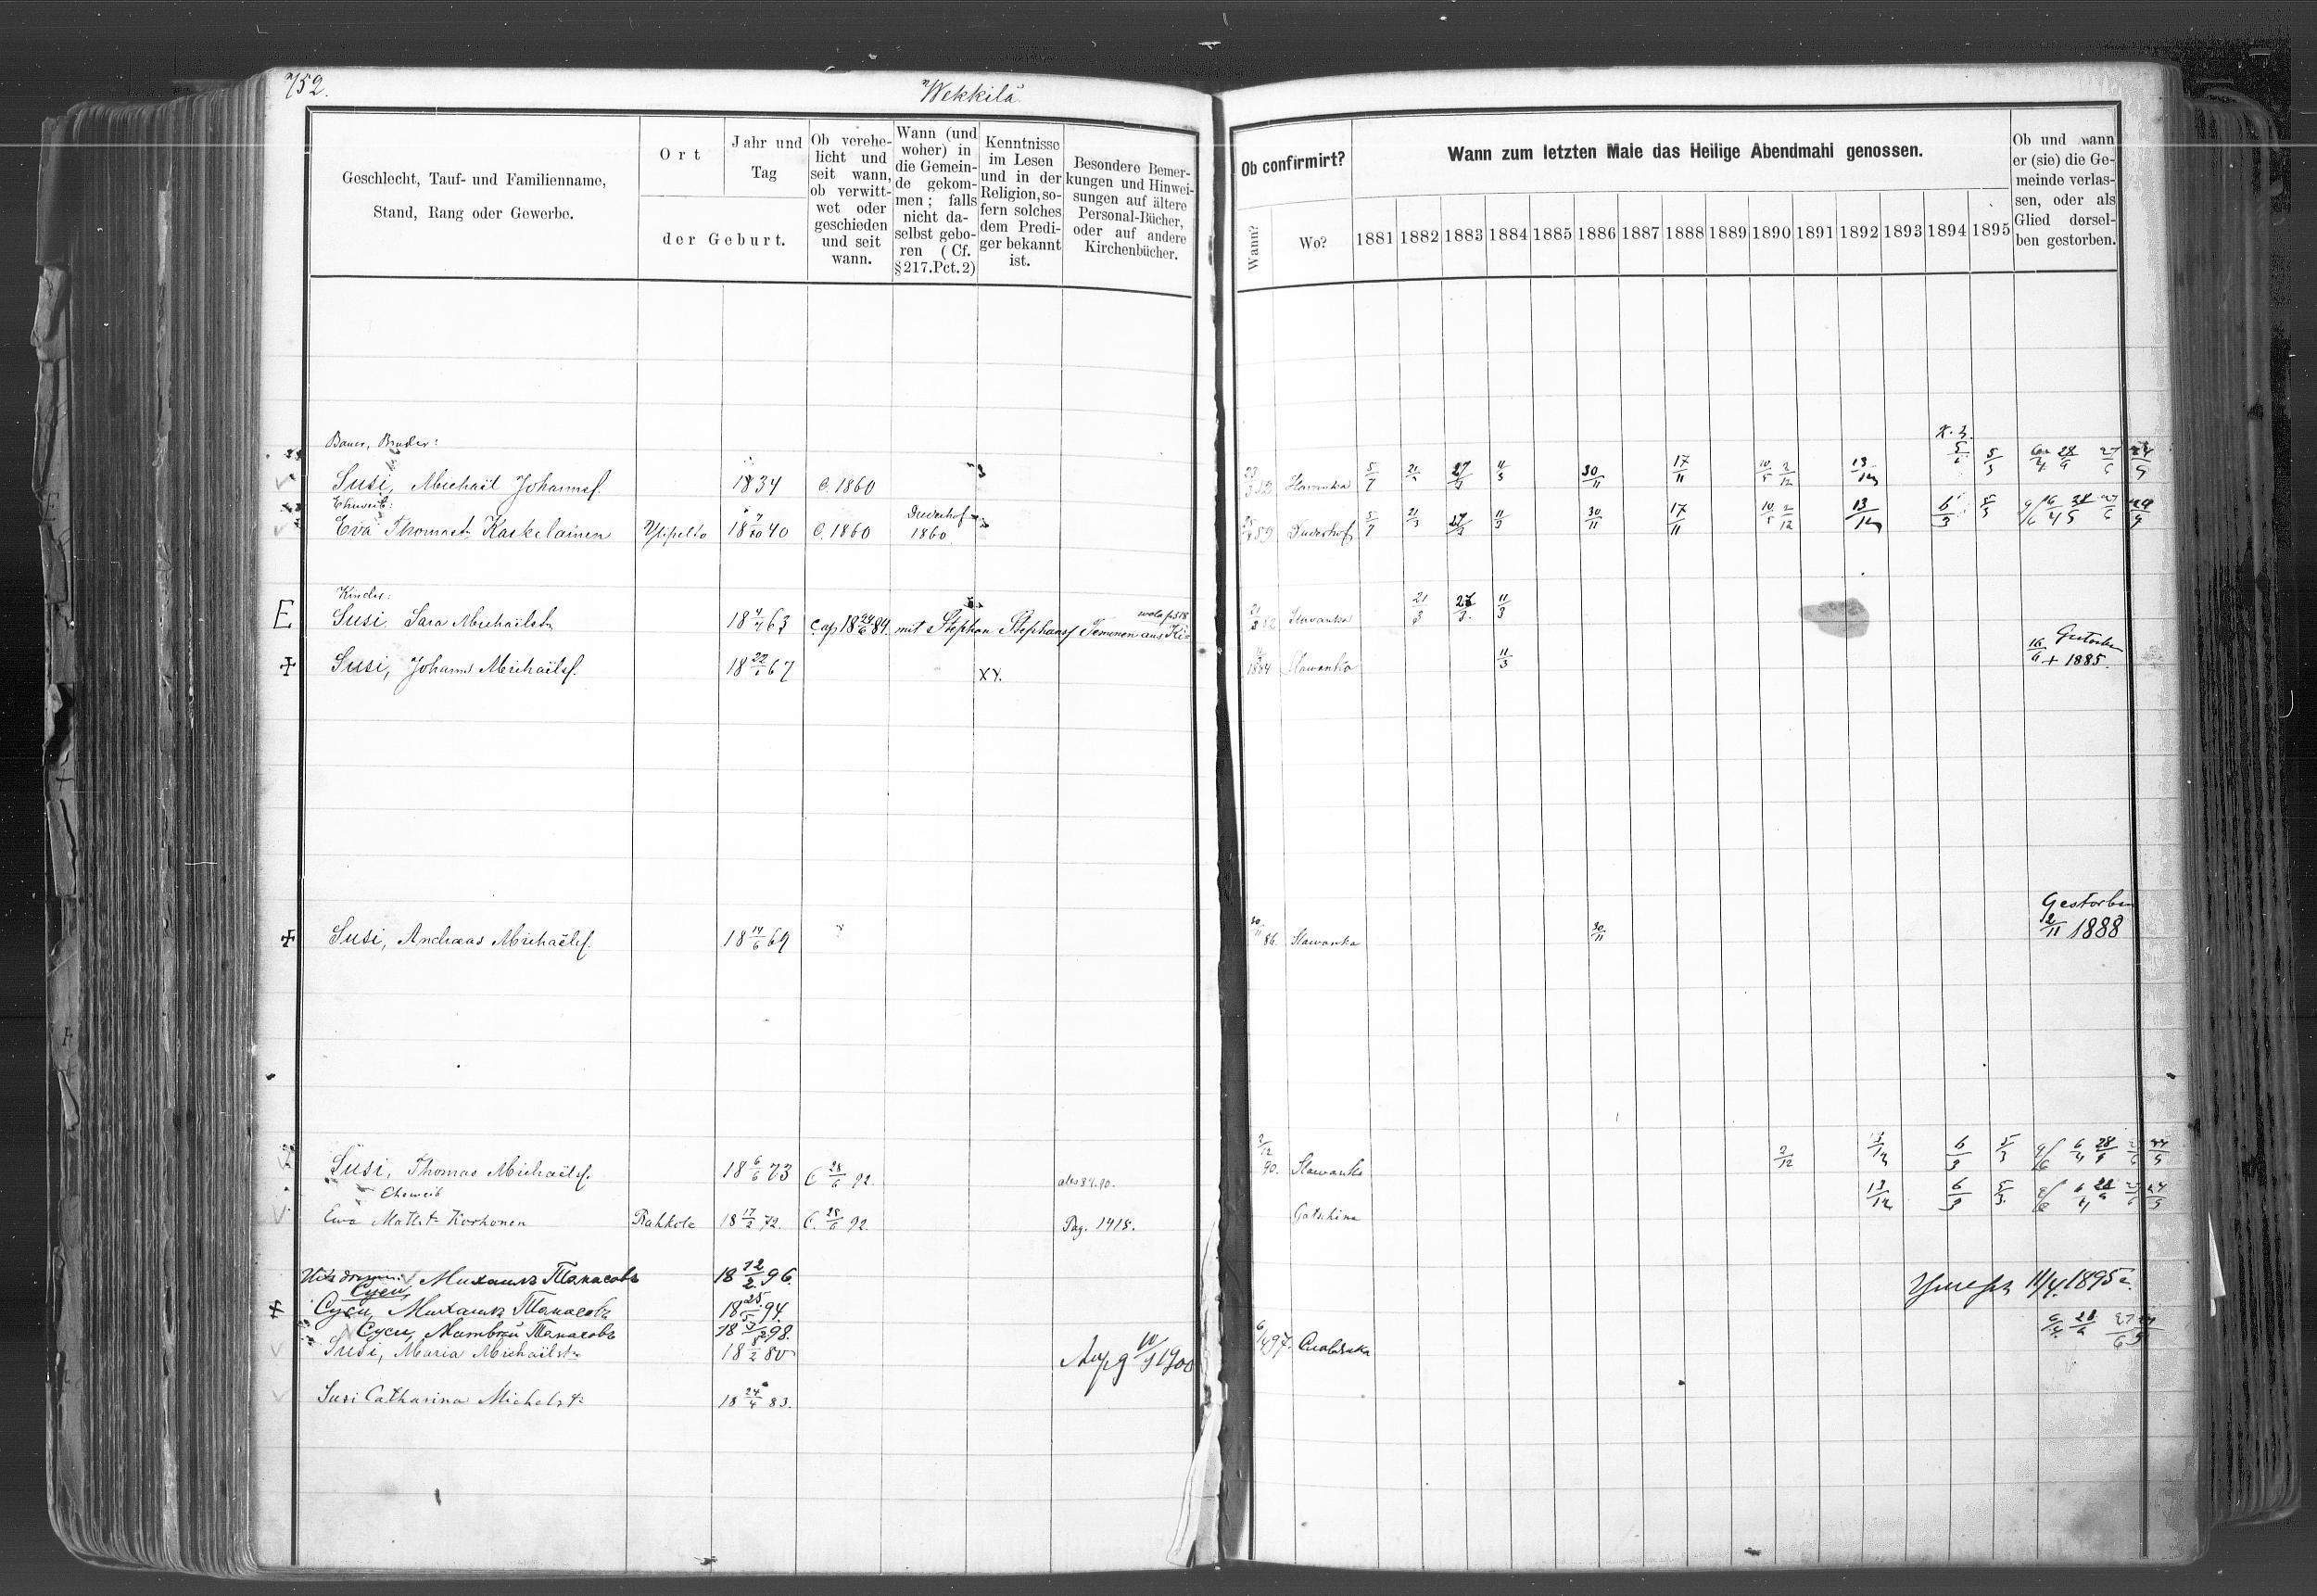 Scandinavian Genealogy Record for Finland